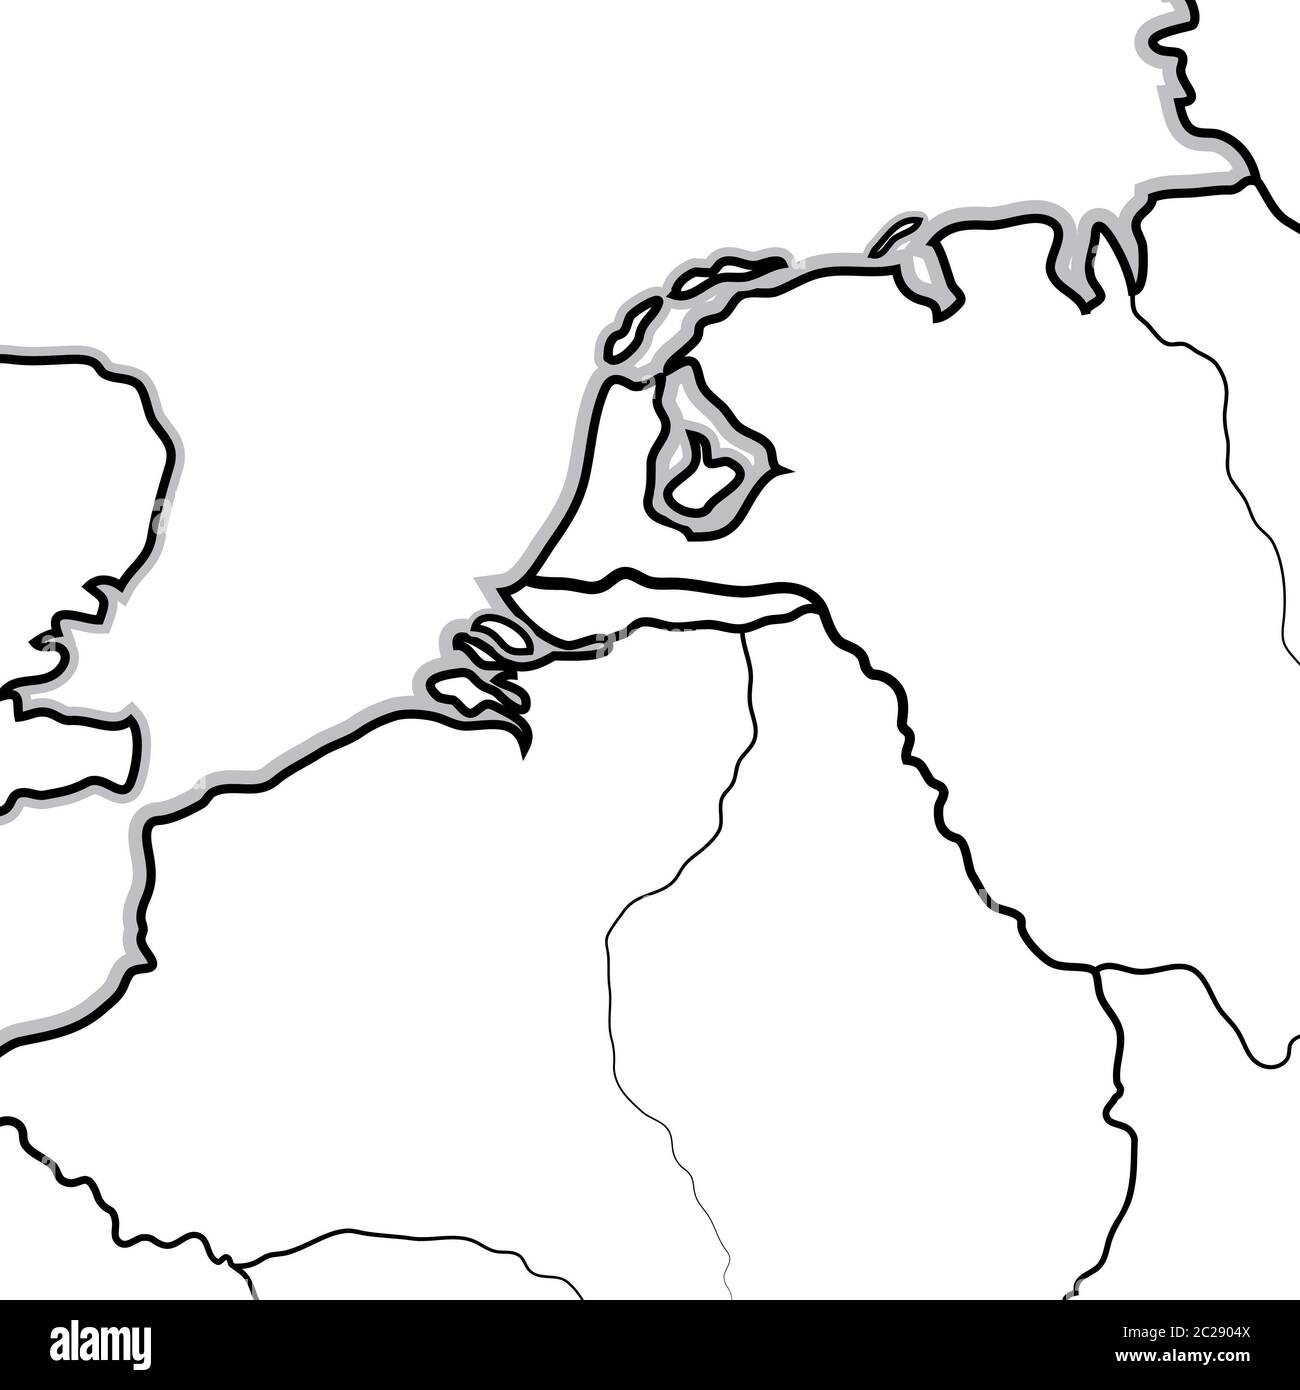 Mappa delle terre olandesi: Paesi Bassi, Belgio, Lussemburgo (Benelux). Grafico geografico. Foto Stock